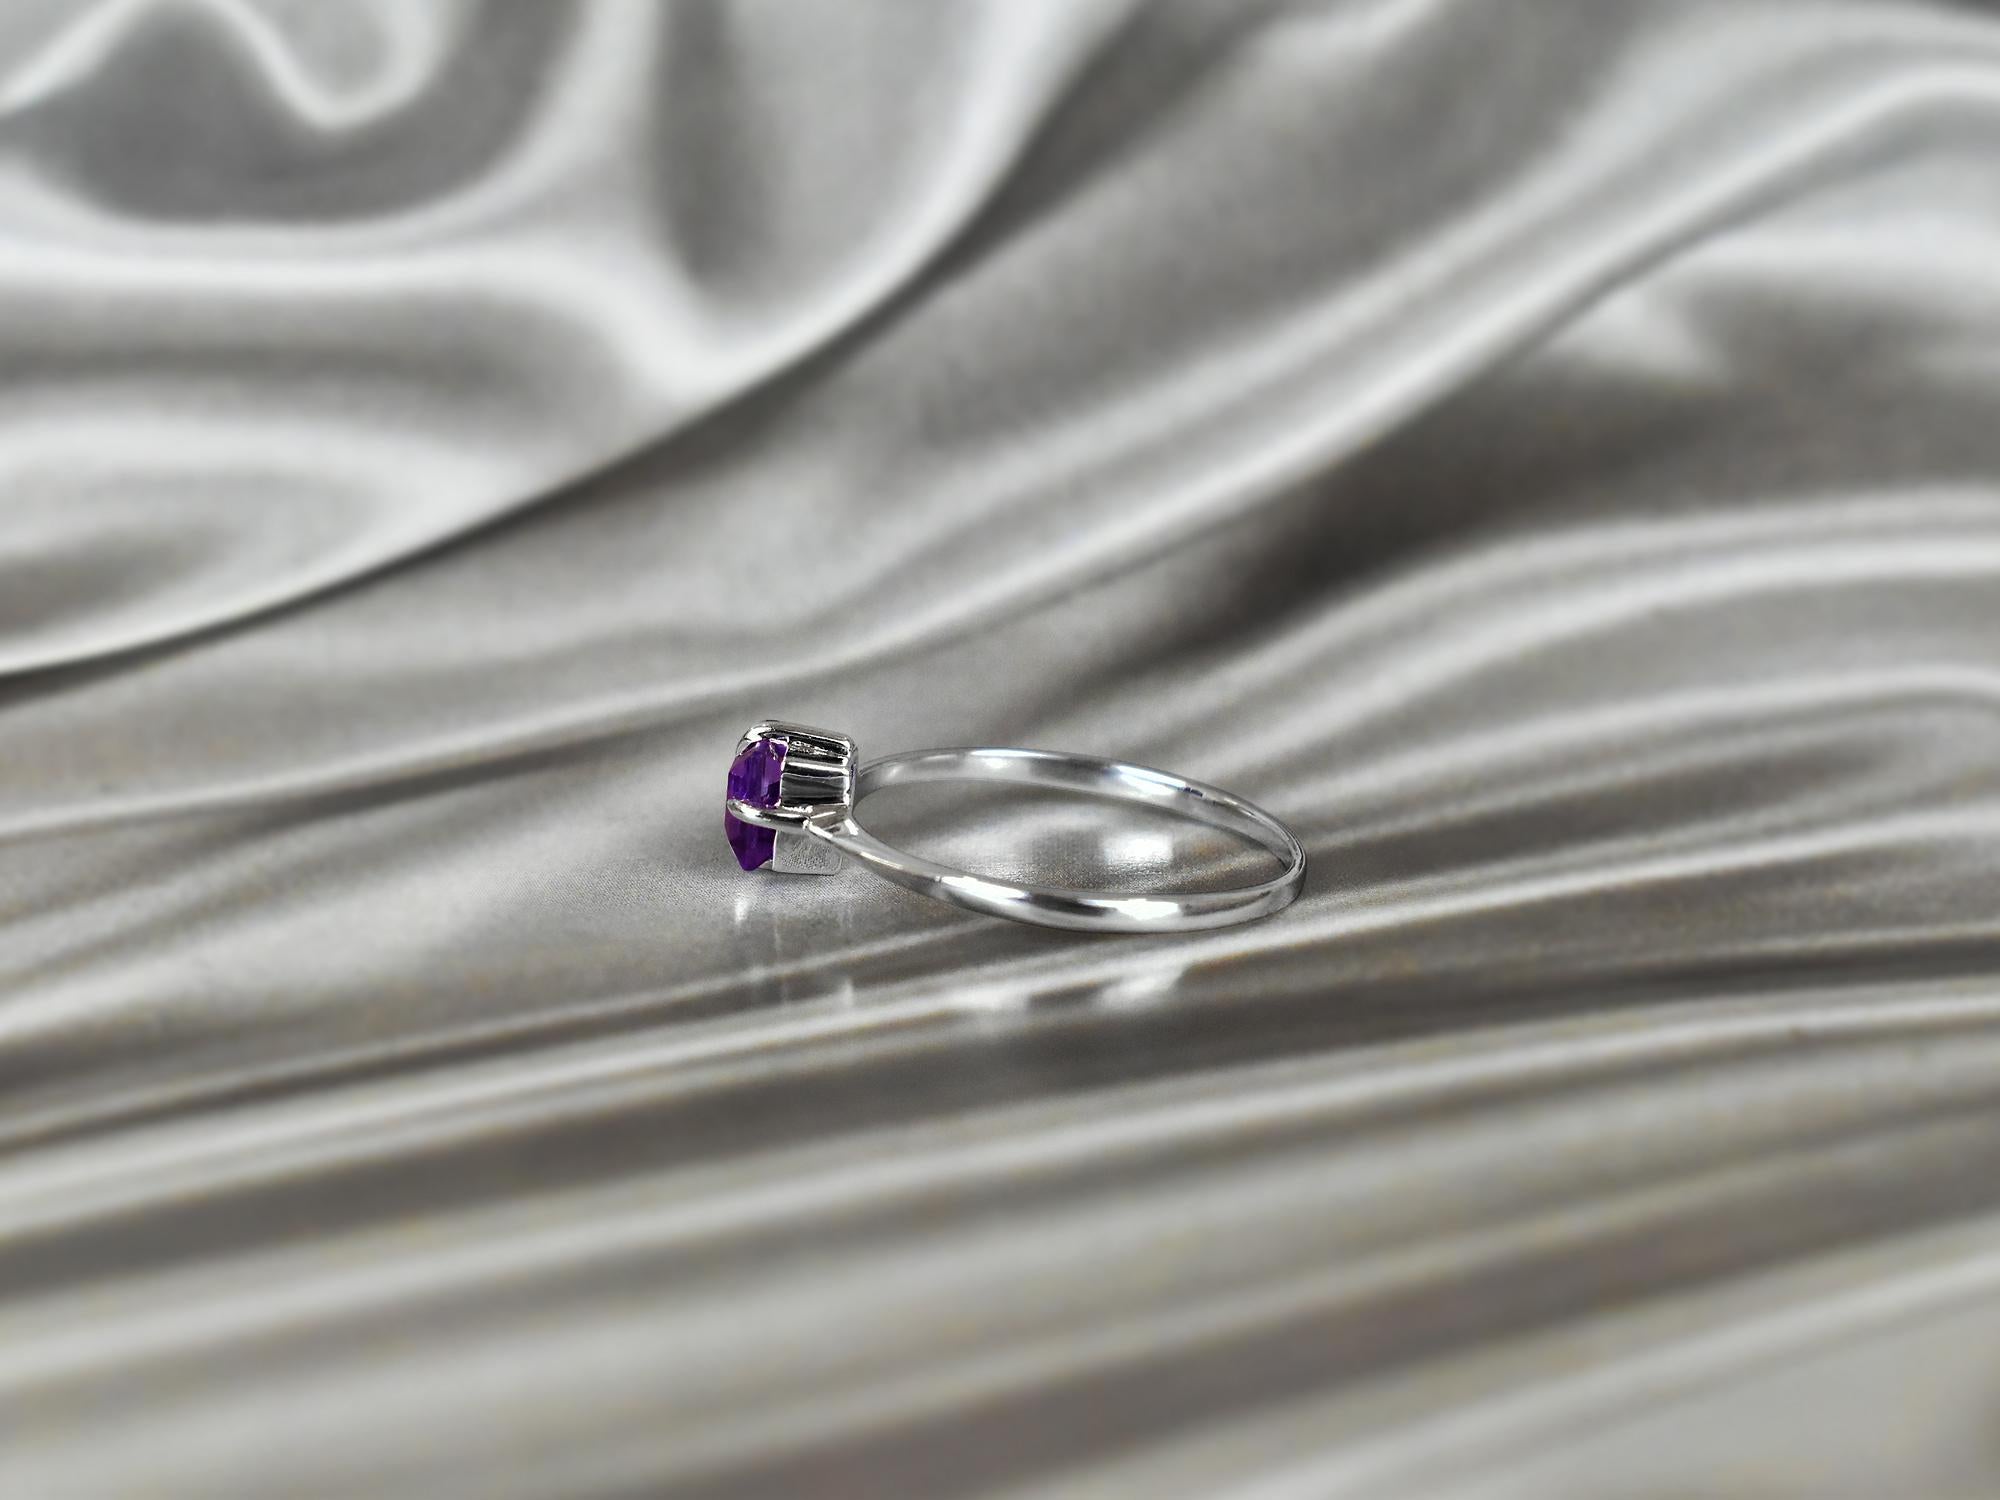 For Sale:  14k Gold Princess Cut 5x5 mm Princess Cut Gemstone Ring Gemstone Engagement Ring 10